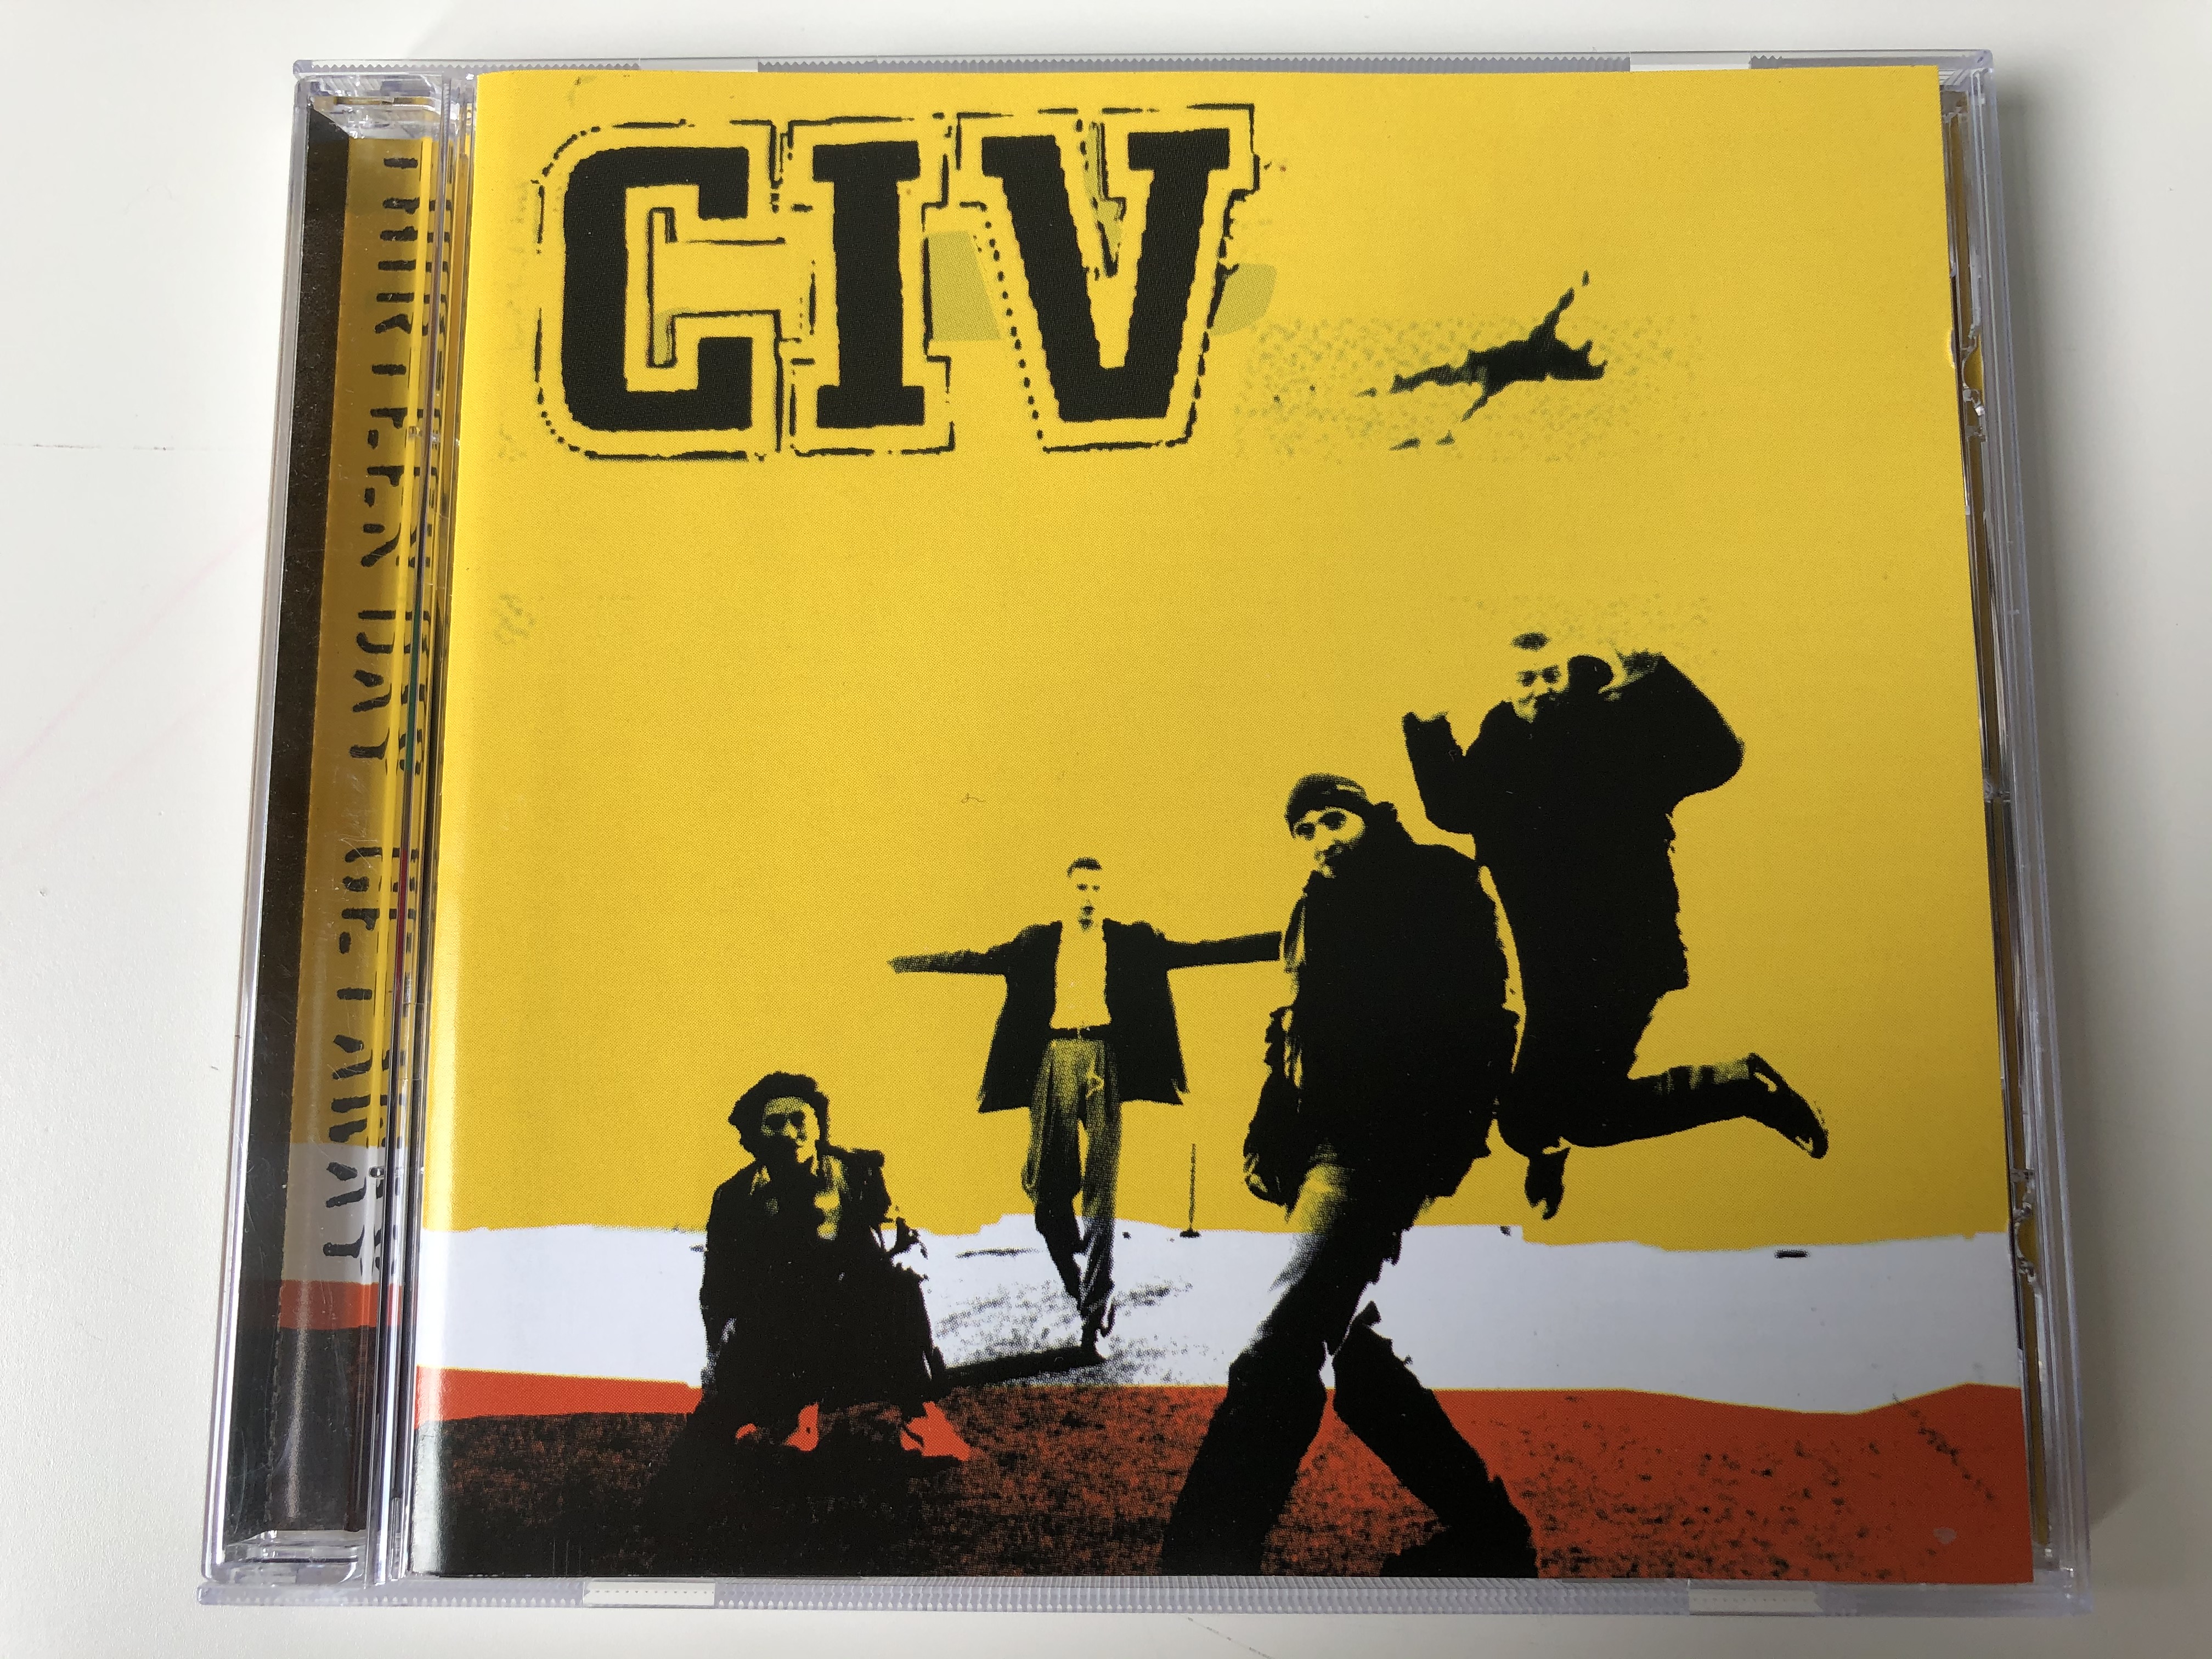 civ-thirteen-day-getaway-atlantic-audio-cd-1998-7567-83073-2-1-.jpg